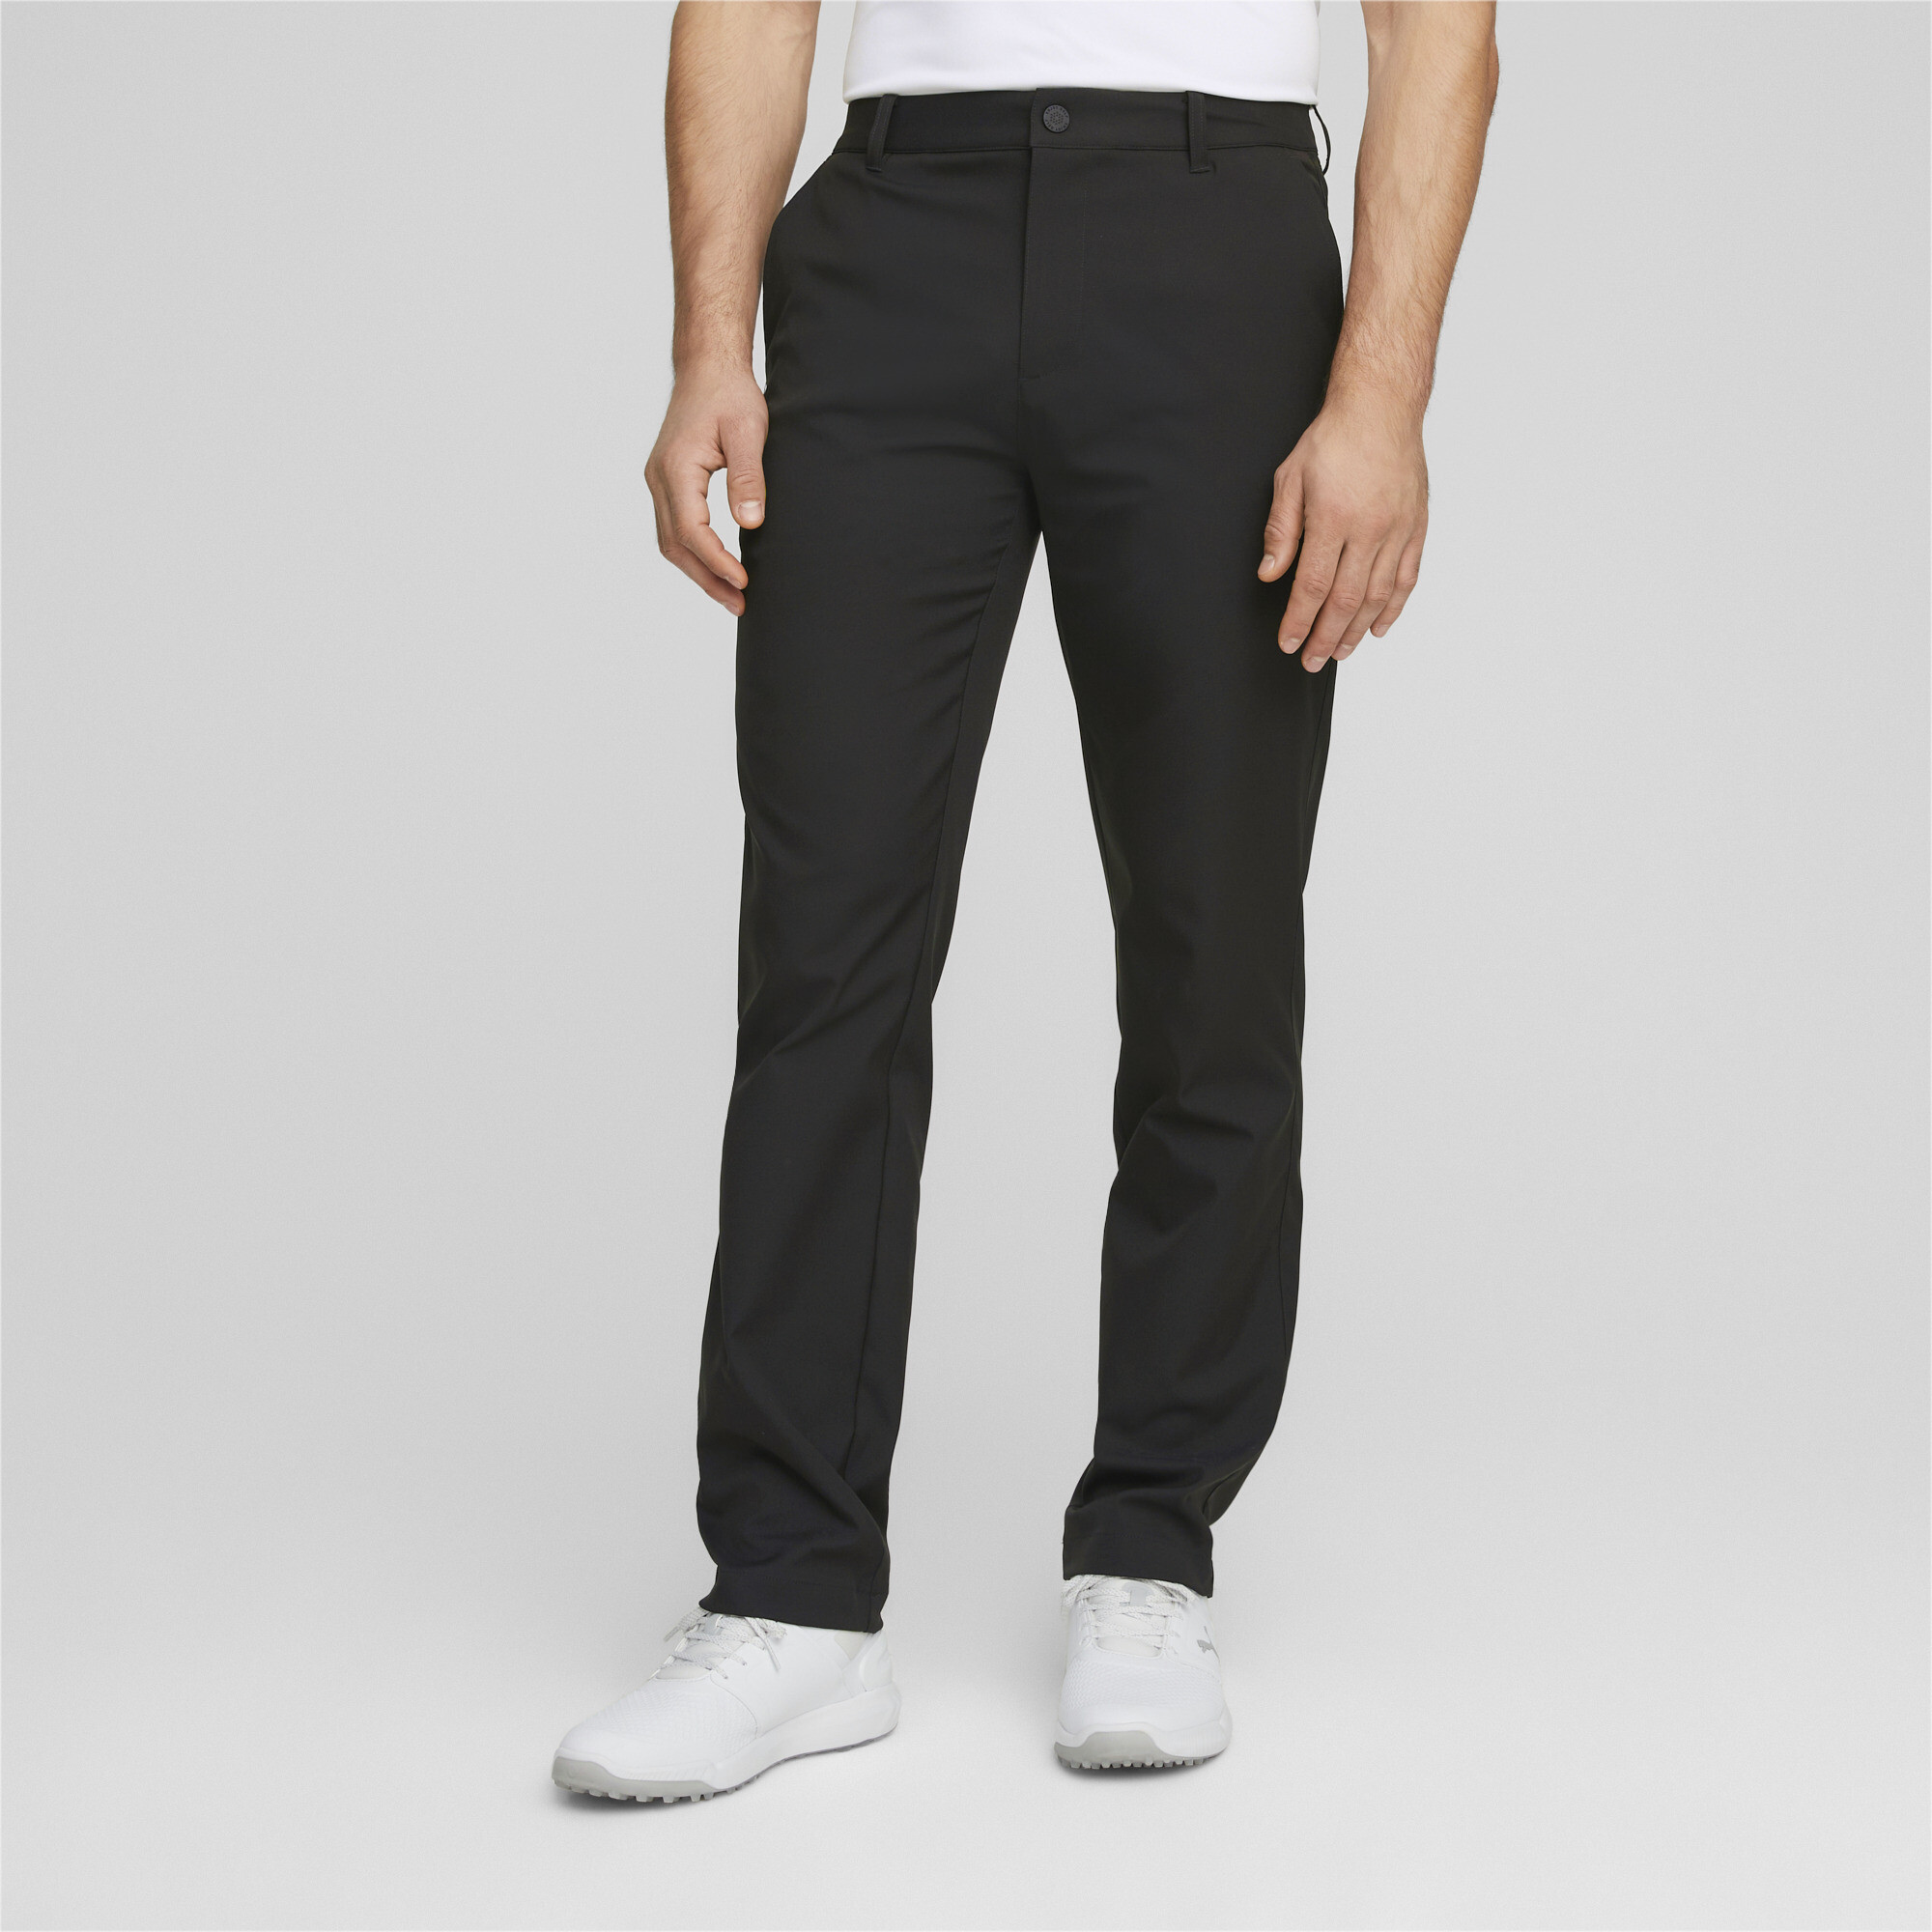 Men's Puma Dealer Golf Pants, Black, Size 33/32, Clothing